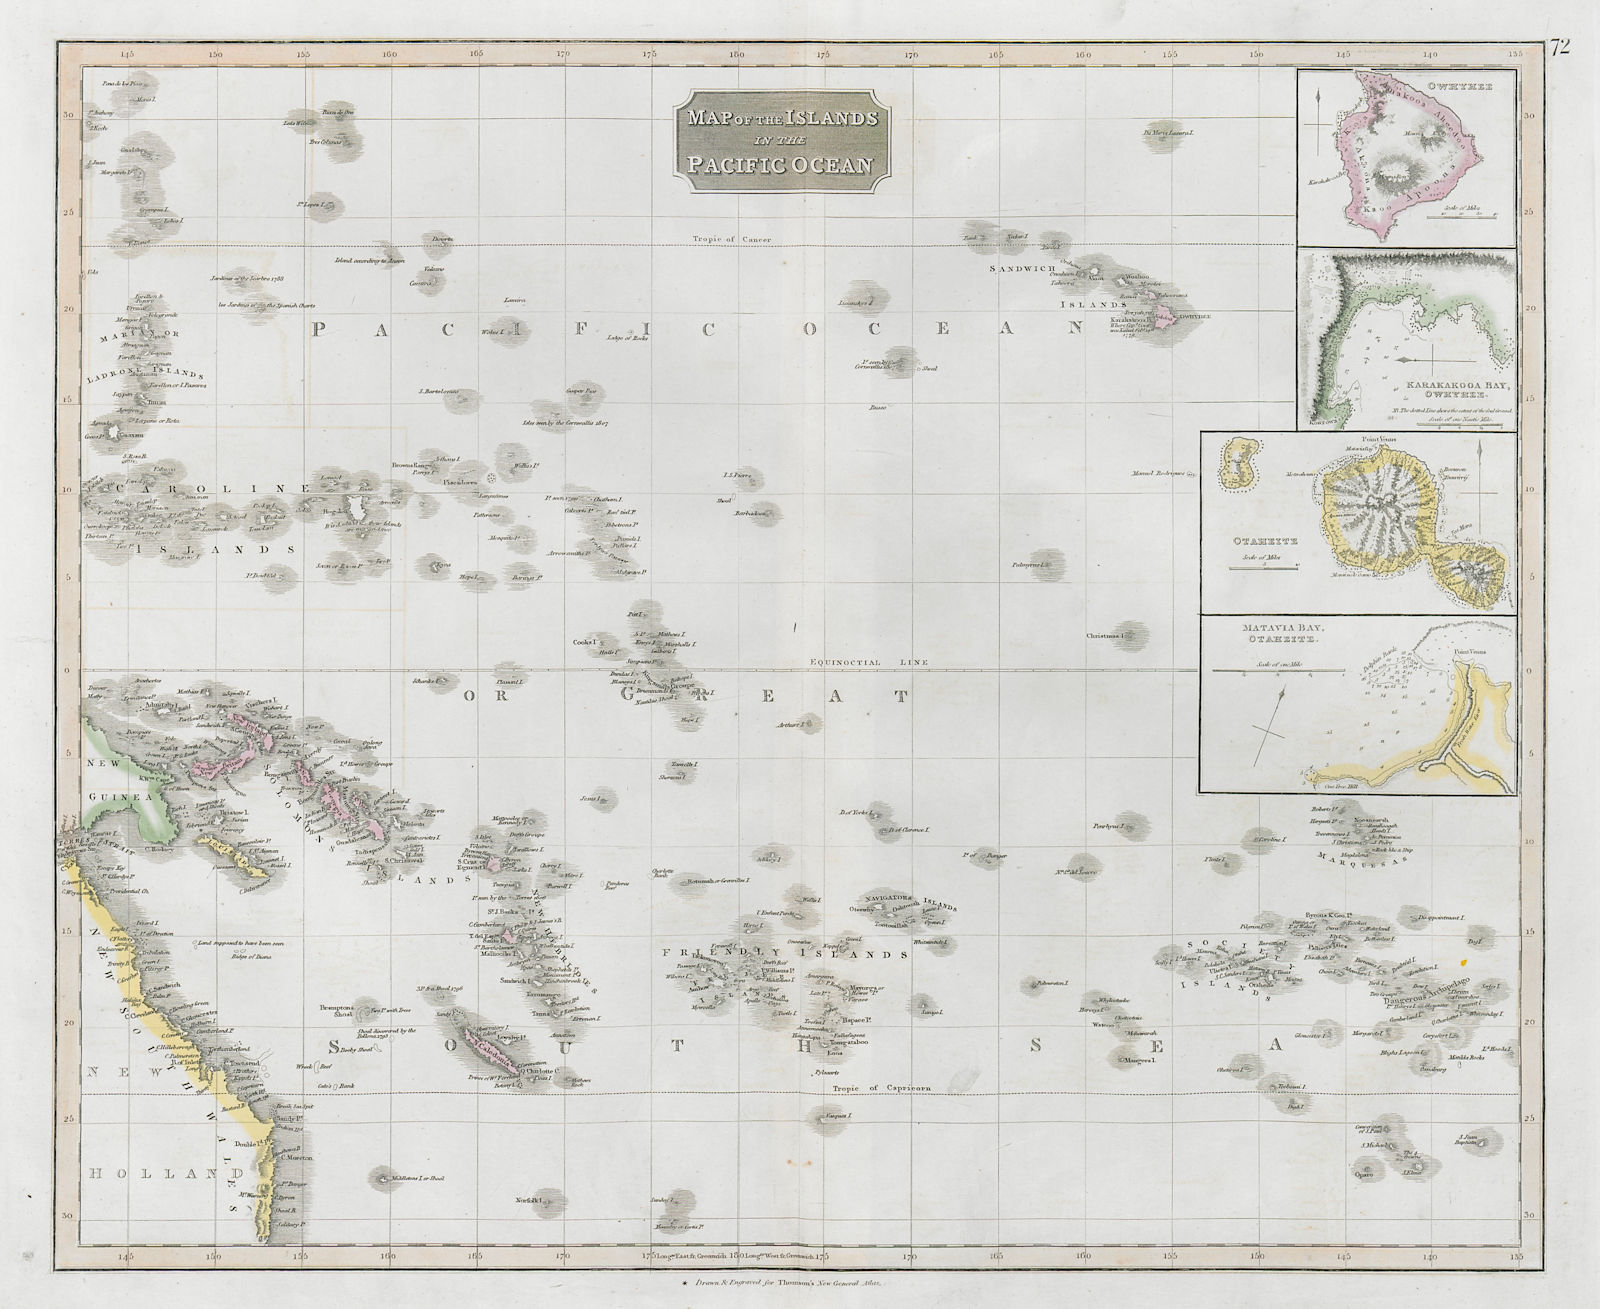 Associate Product Islands in the Pacific Ocean. Hawaii. Phantom Jardines islands. THOMSON 1830 map